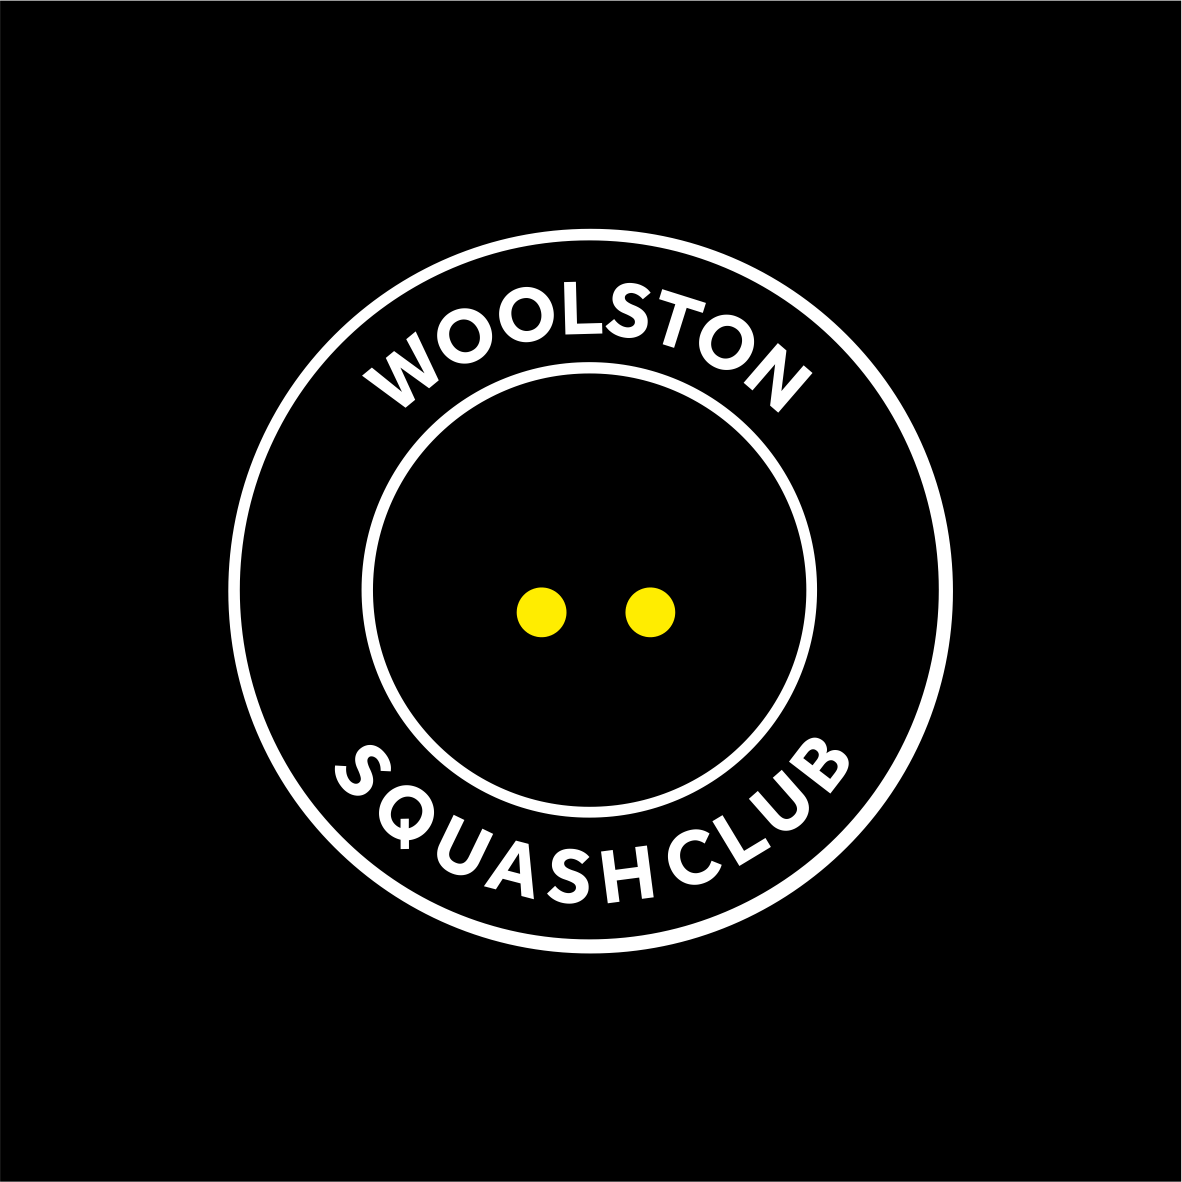 Woolston Squash